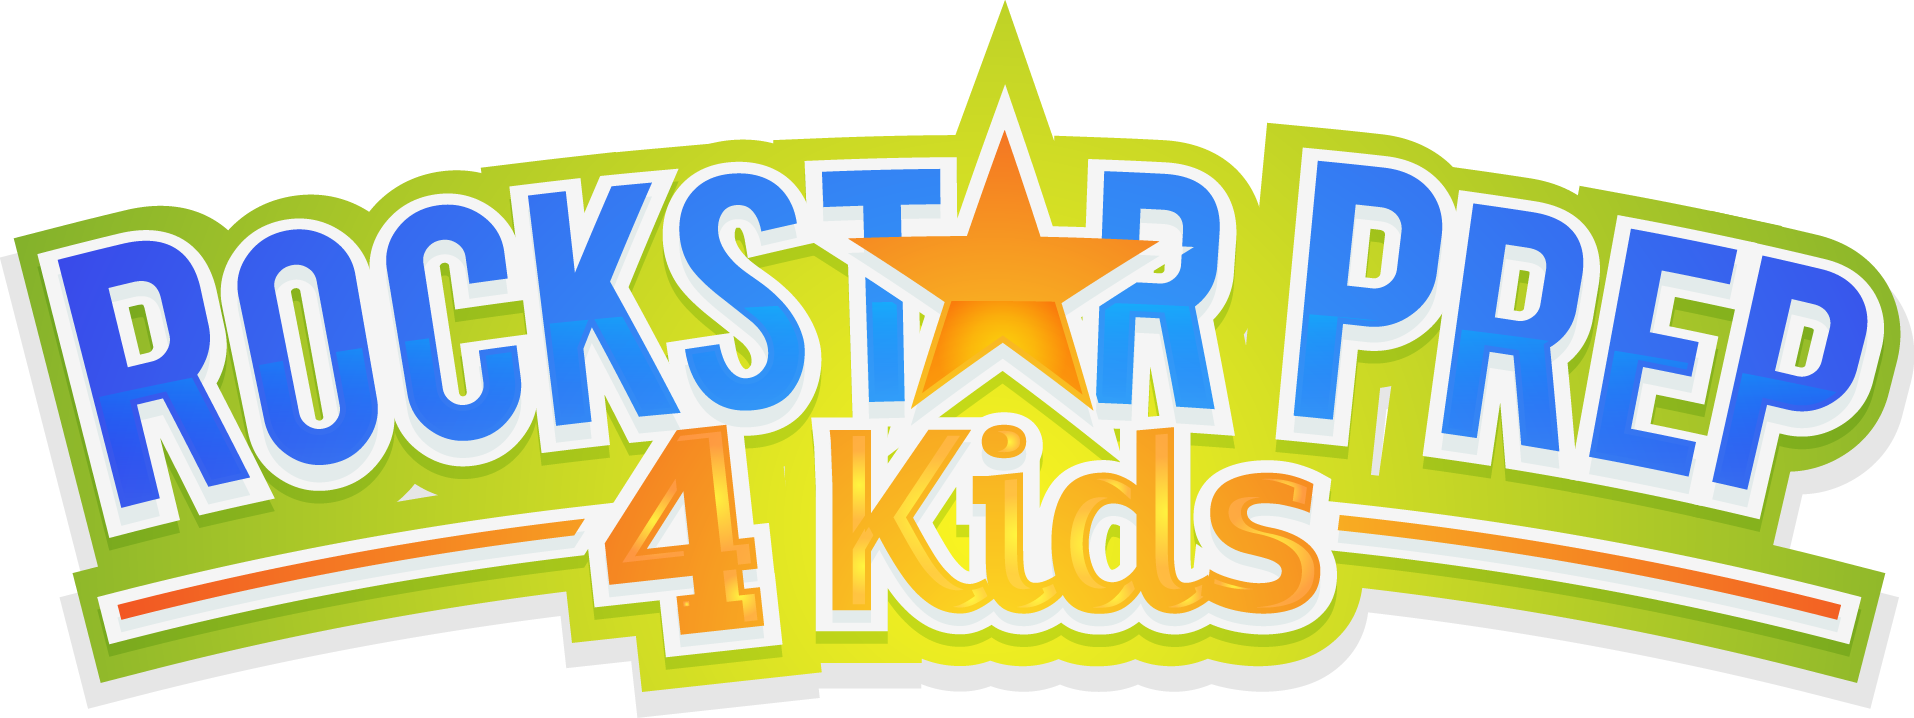 Rockstar Prep 4 Kids Inc